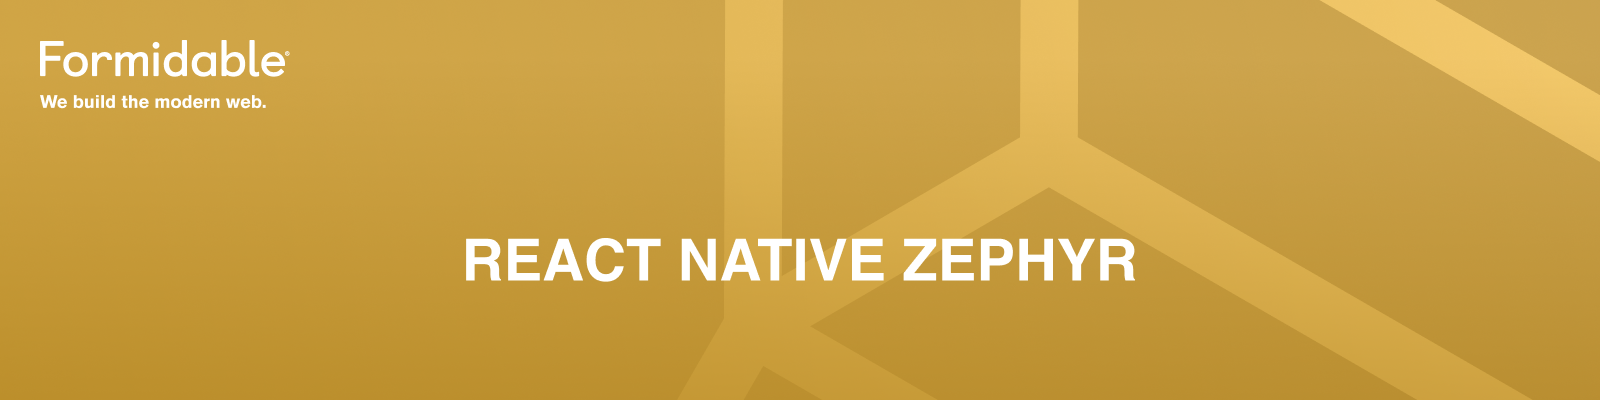 React Native Zephyr — Formidable, We build the modern web